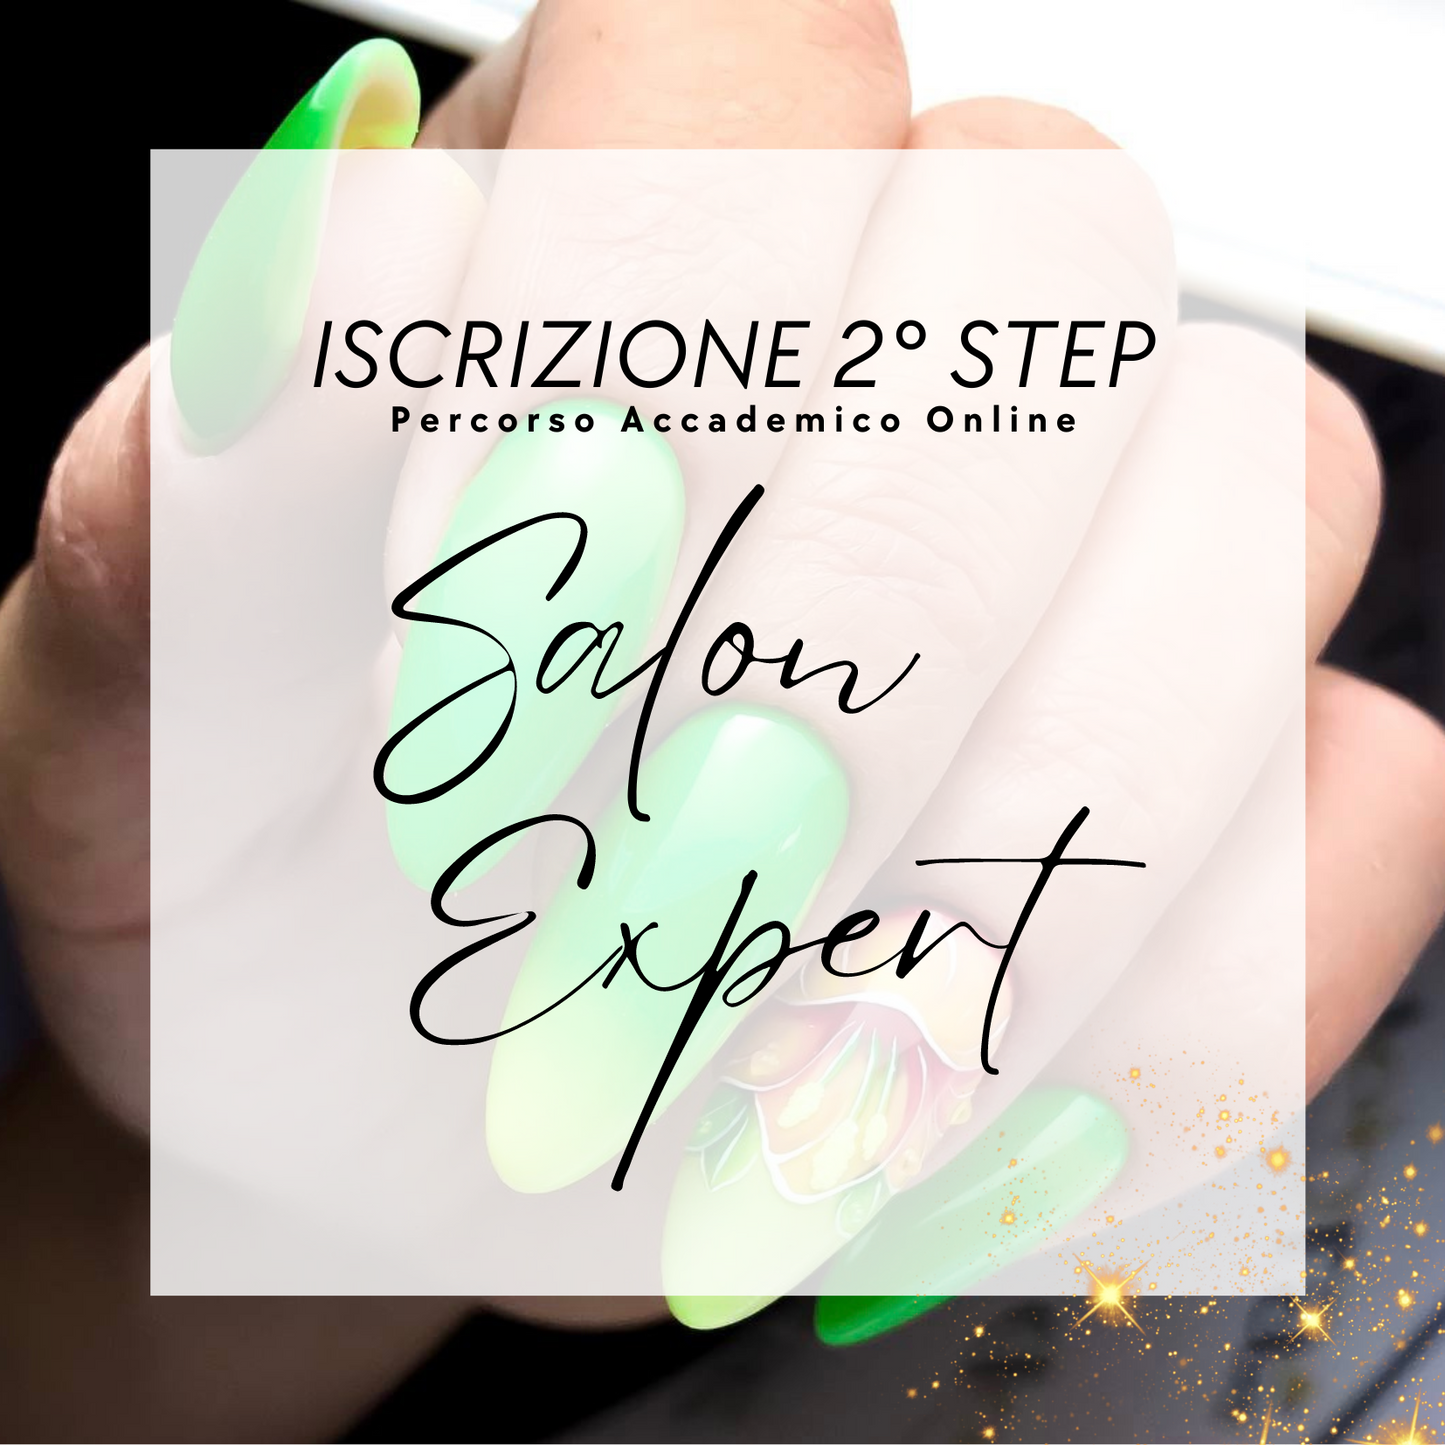 Iscrizione 2° Step “Salon Expert”